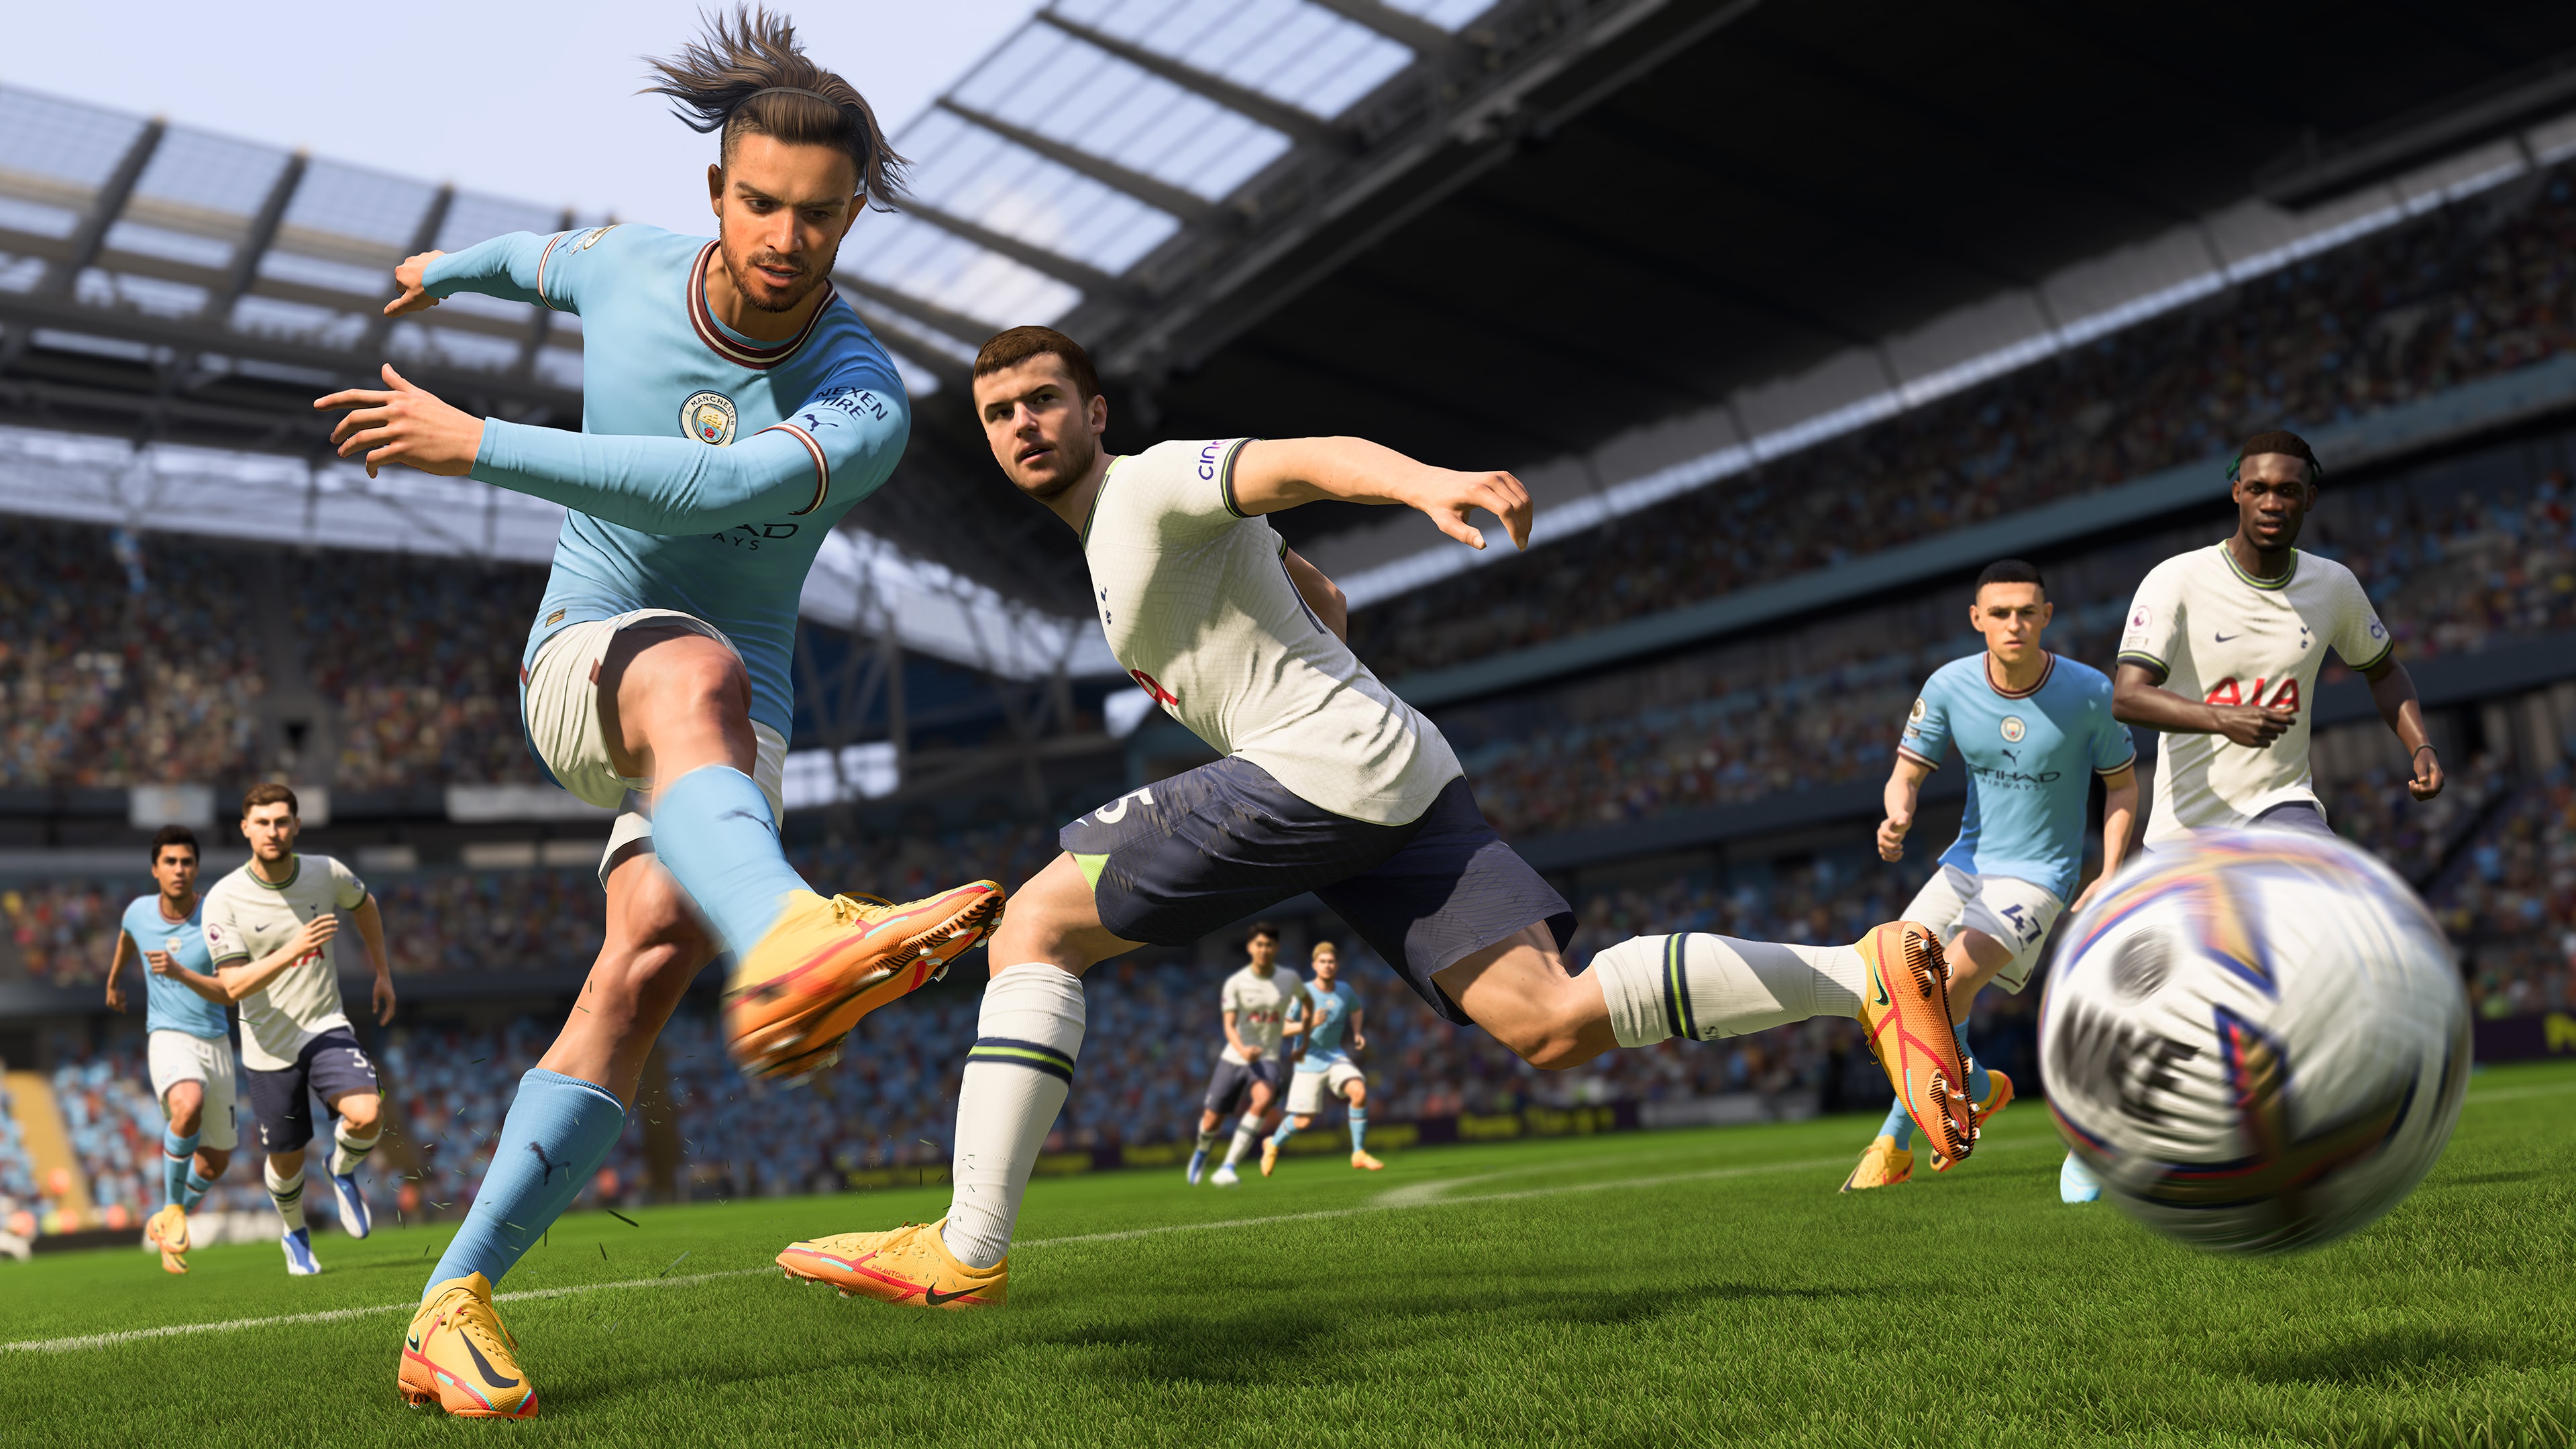 EA SPORTS™ FIFA 23 Standard Edition PS5™